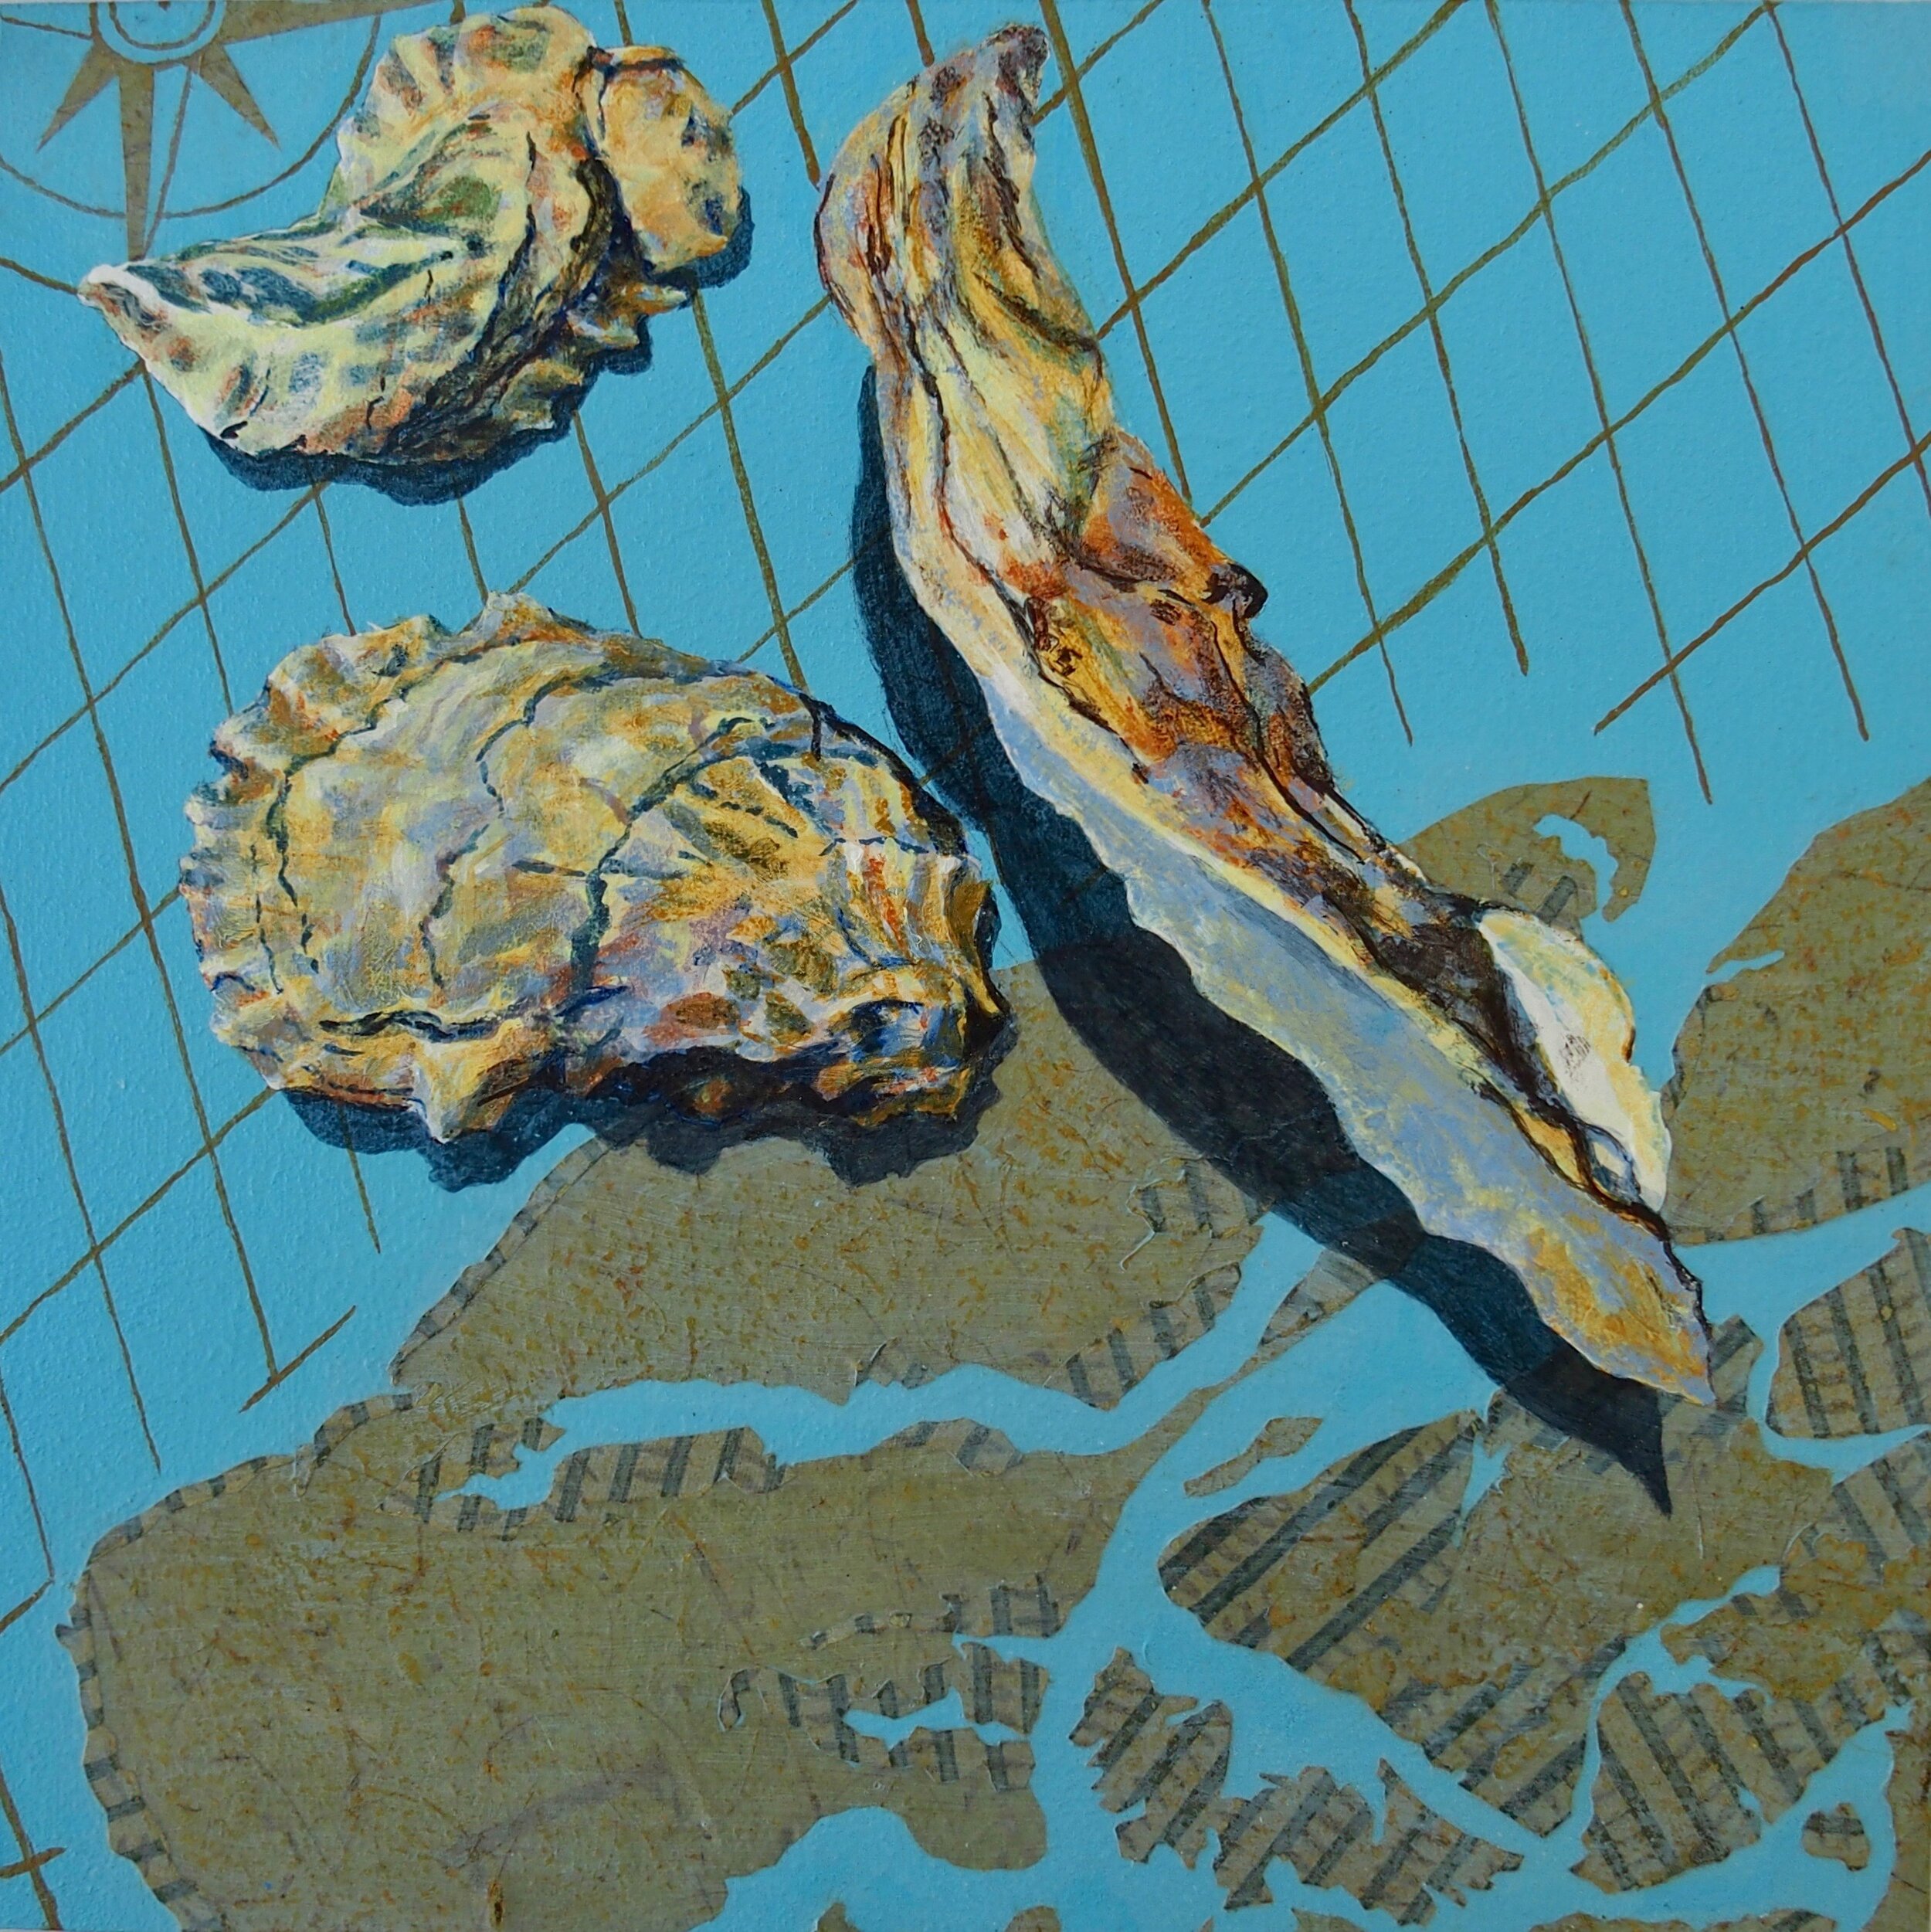 Oysters on Hilton Head Island